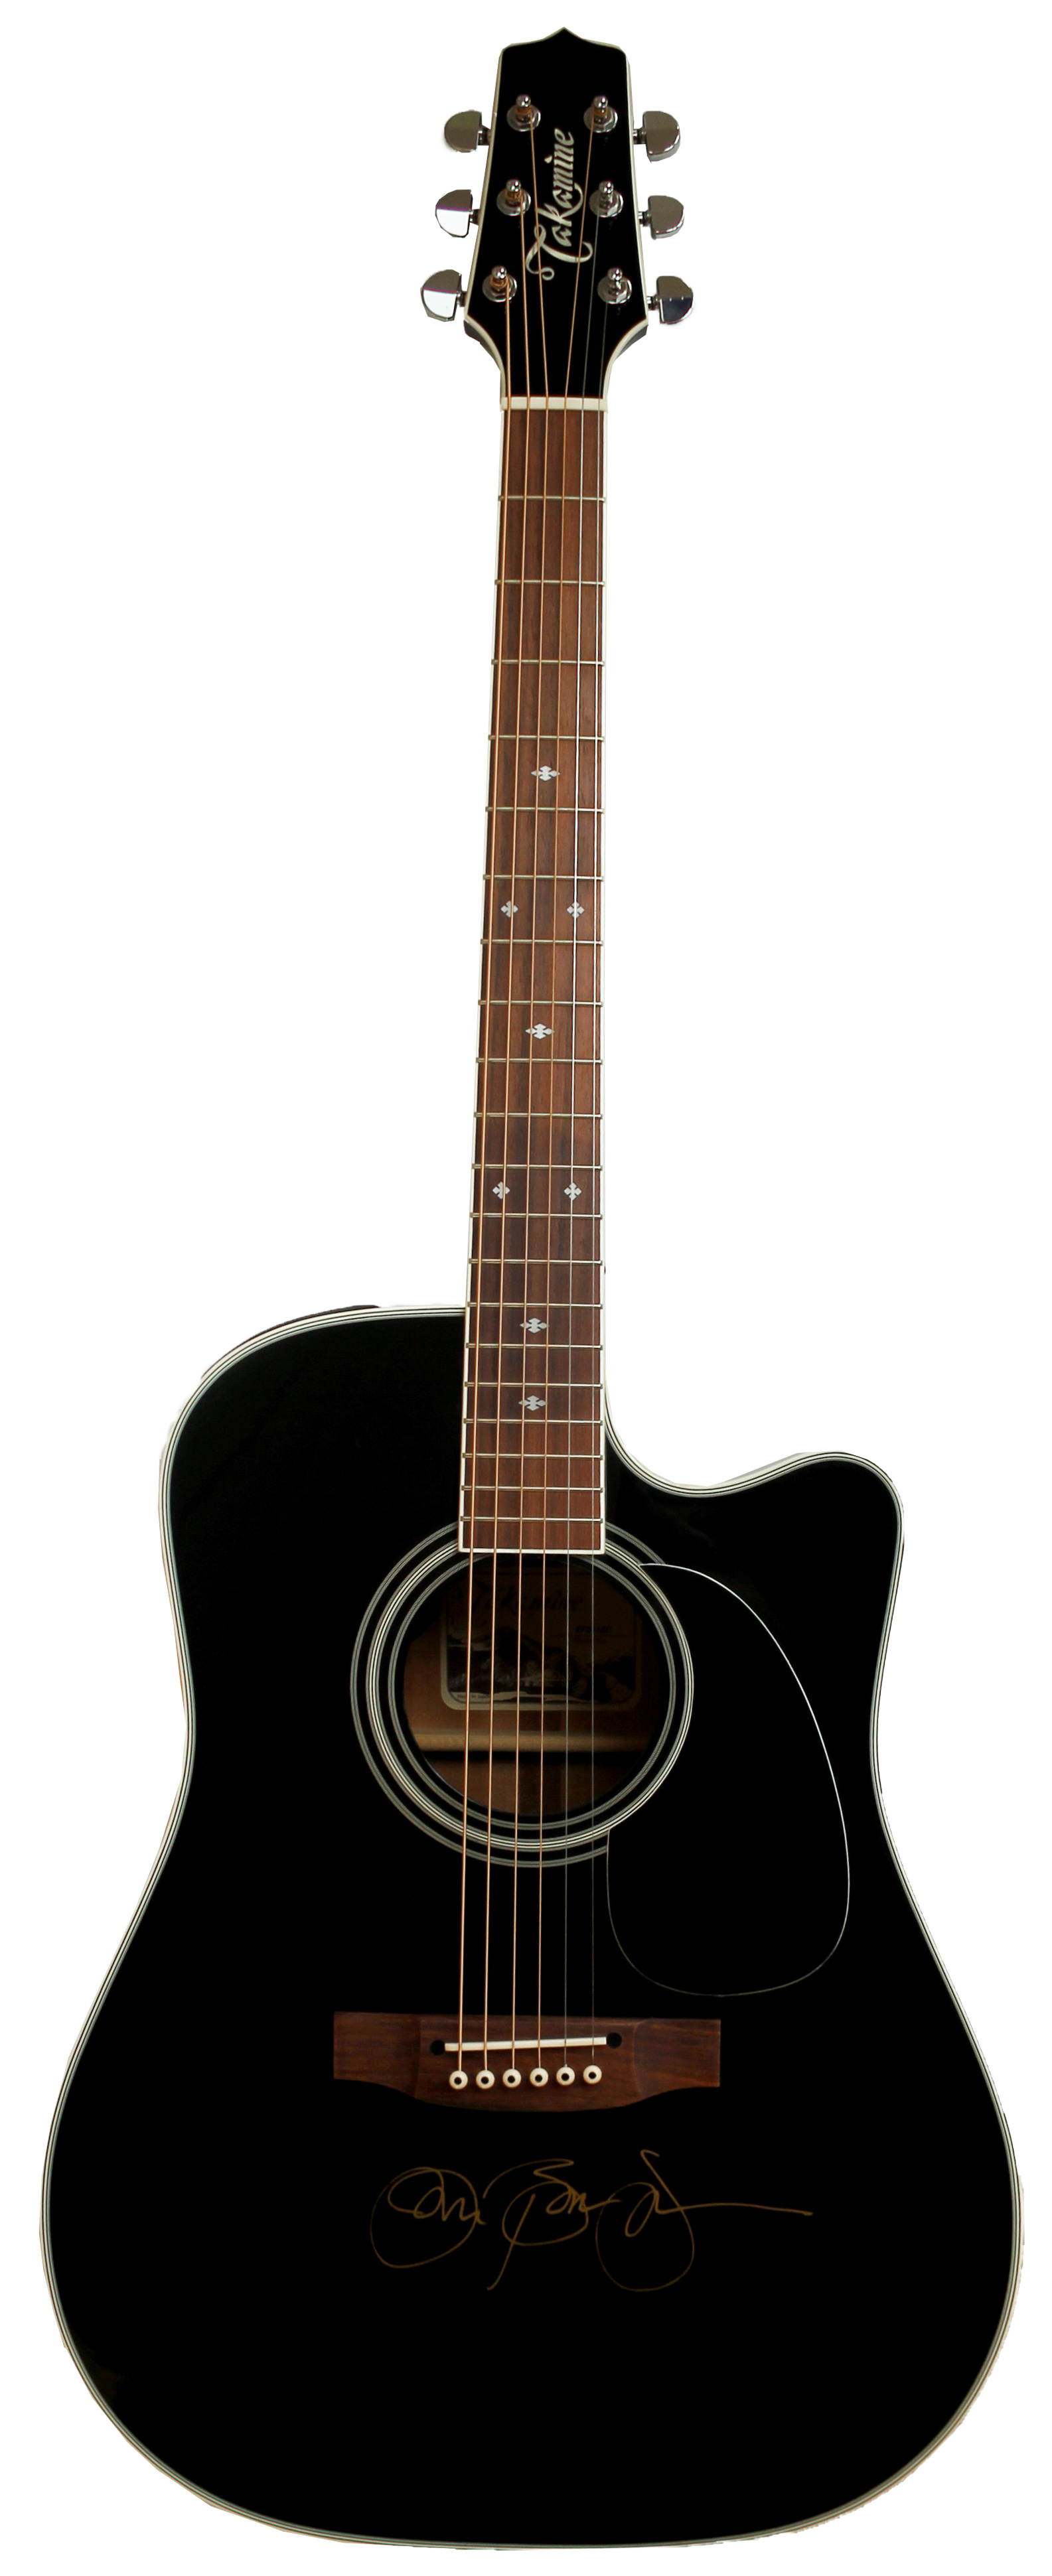 Lot Detail - Jon Bon Jovi Stage Played & Signed Acoustic-Electric Guitar